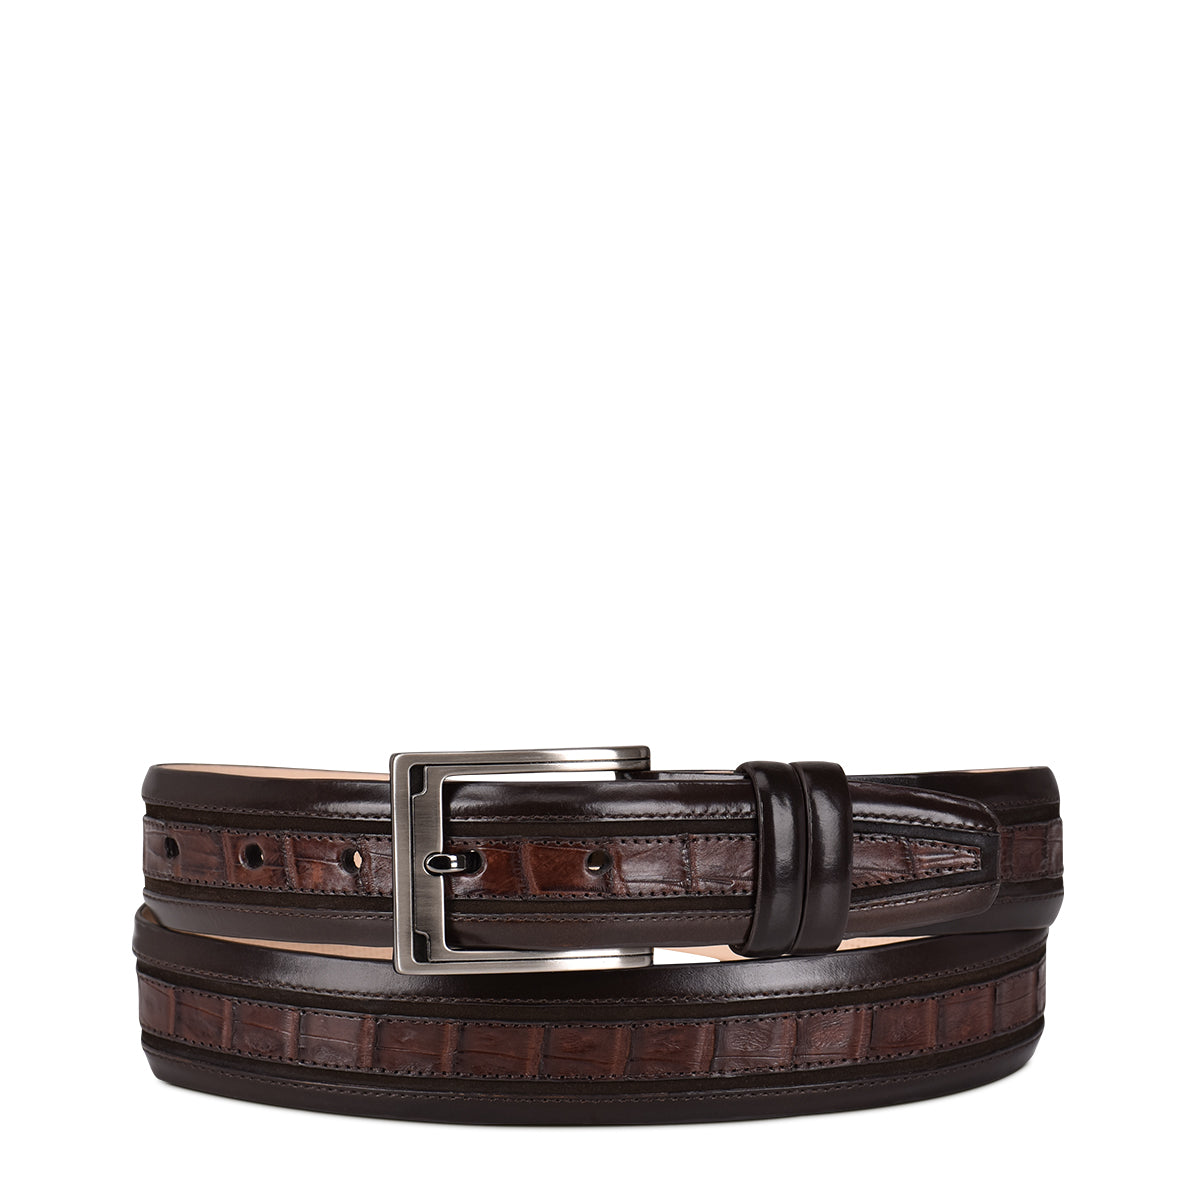 Dark brown formal exotic leather belt 1.5